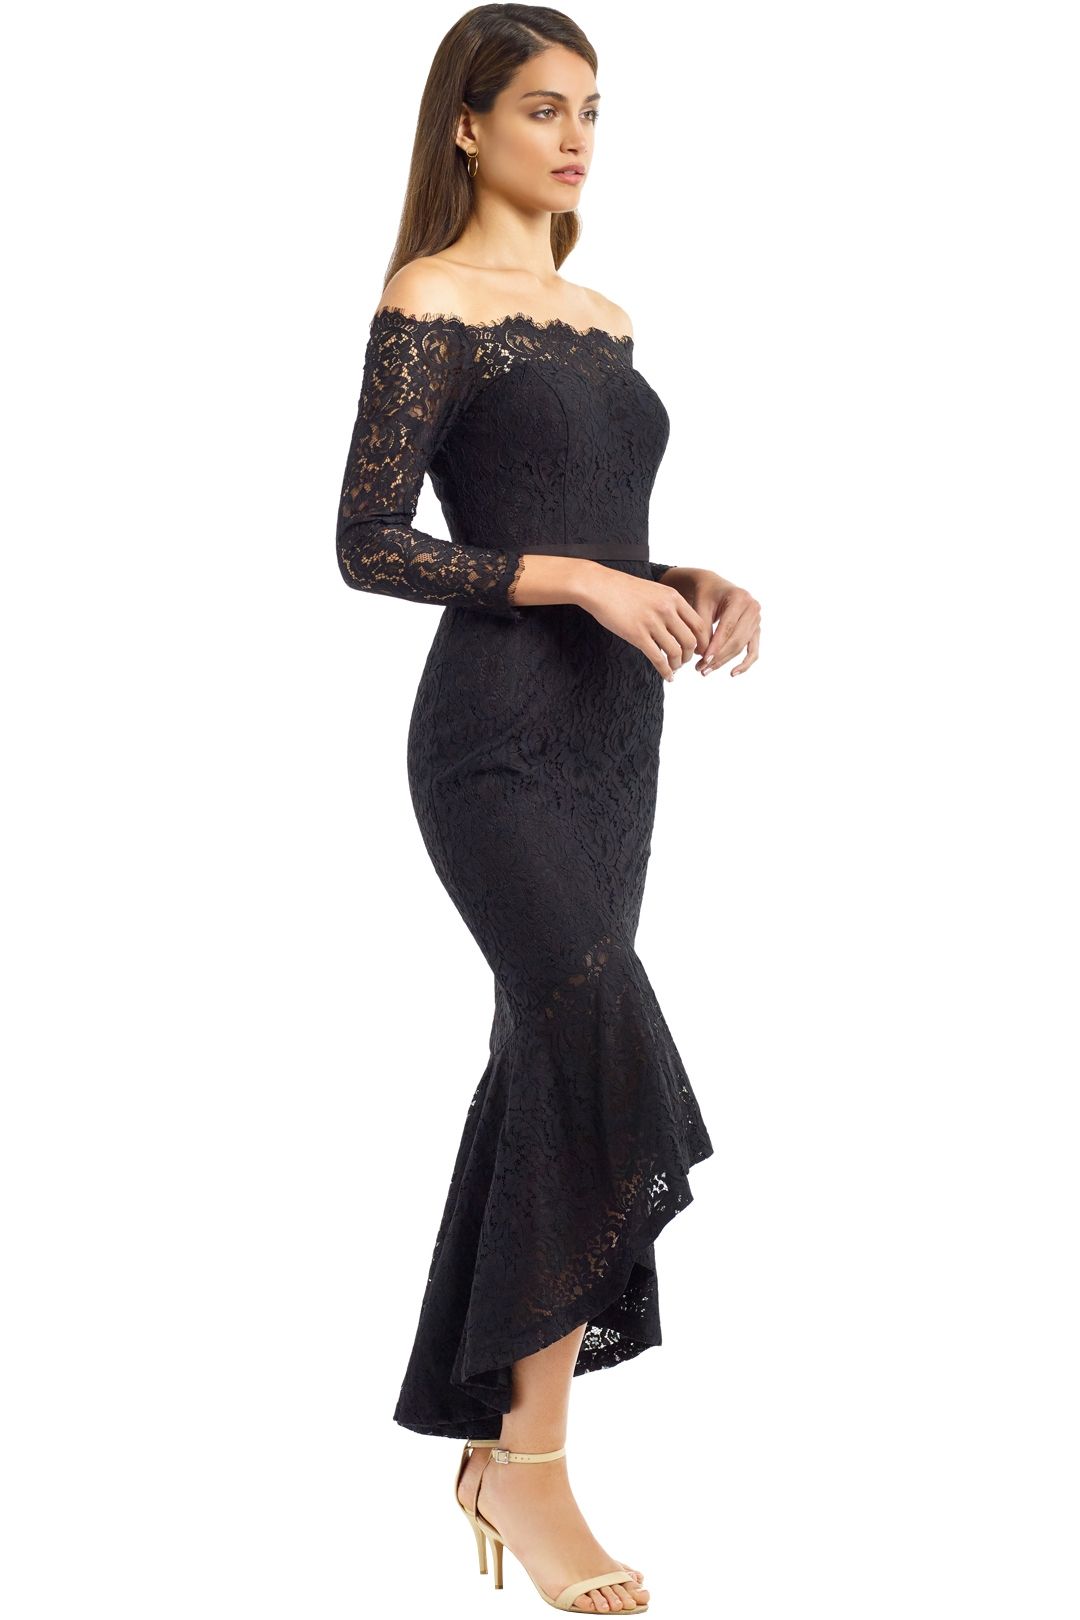 Marchesa Gown in Black by Elle Zeitoune for Rent | GlamCorner